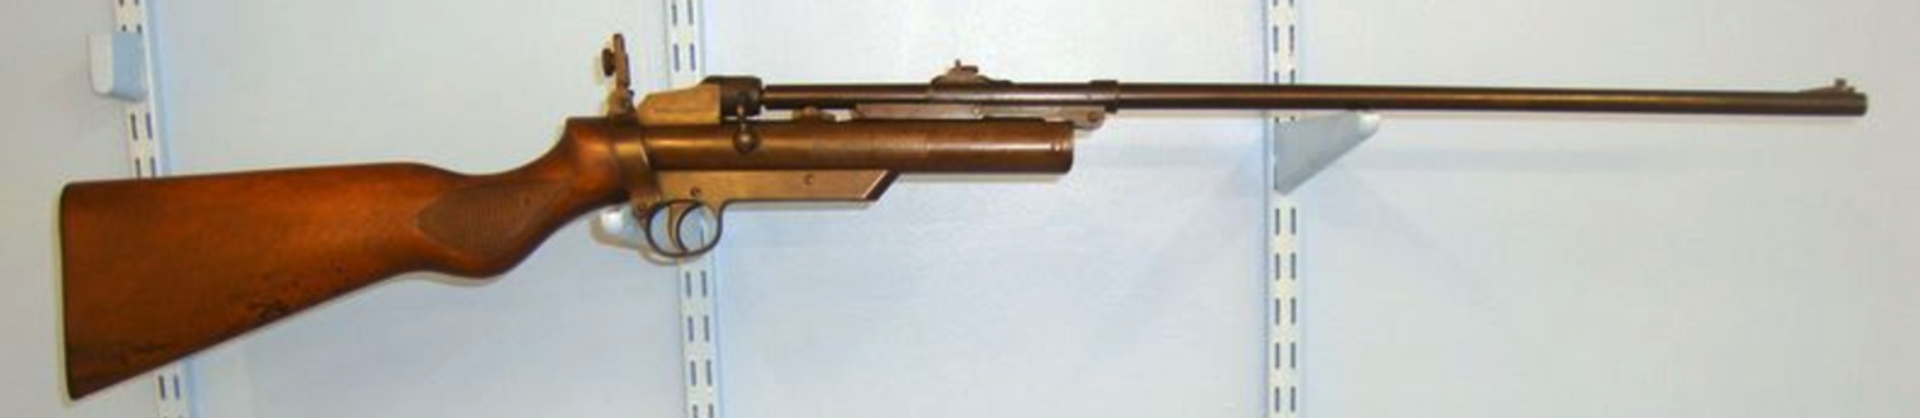 1930's Webley Service, 3rd Series, MK II .22 Calibre Air Rifle. - Image 2 of 3